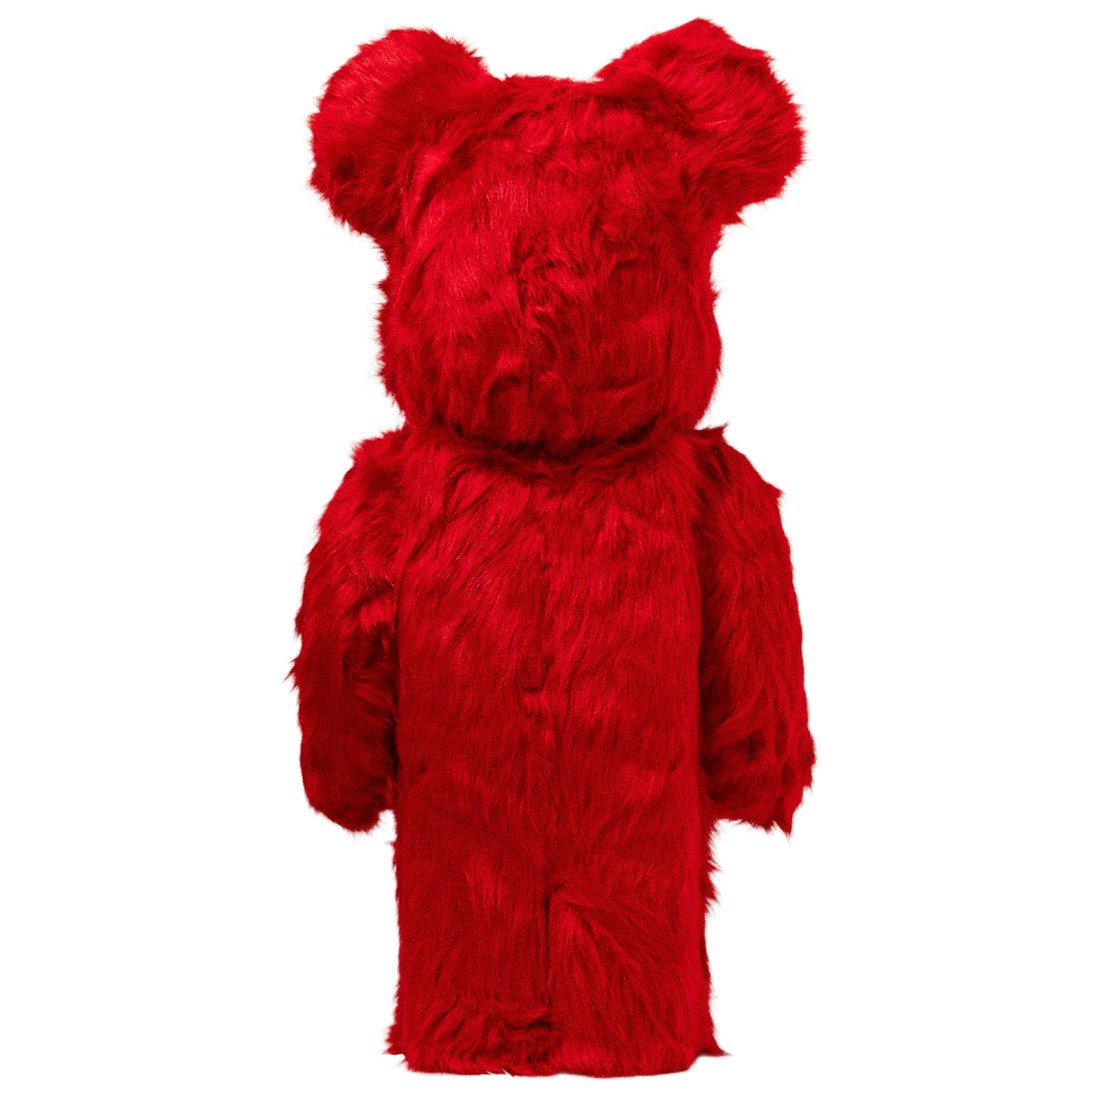 Medicom Sesame Street Elmo Costume Ver. 2.0 1000% Bearbrick Figure red